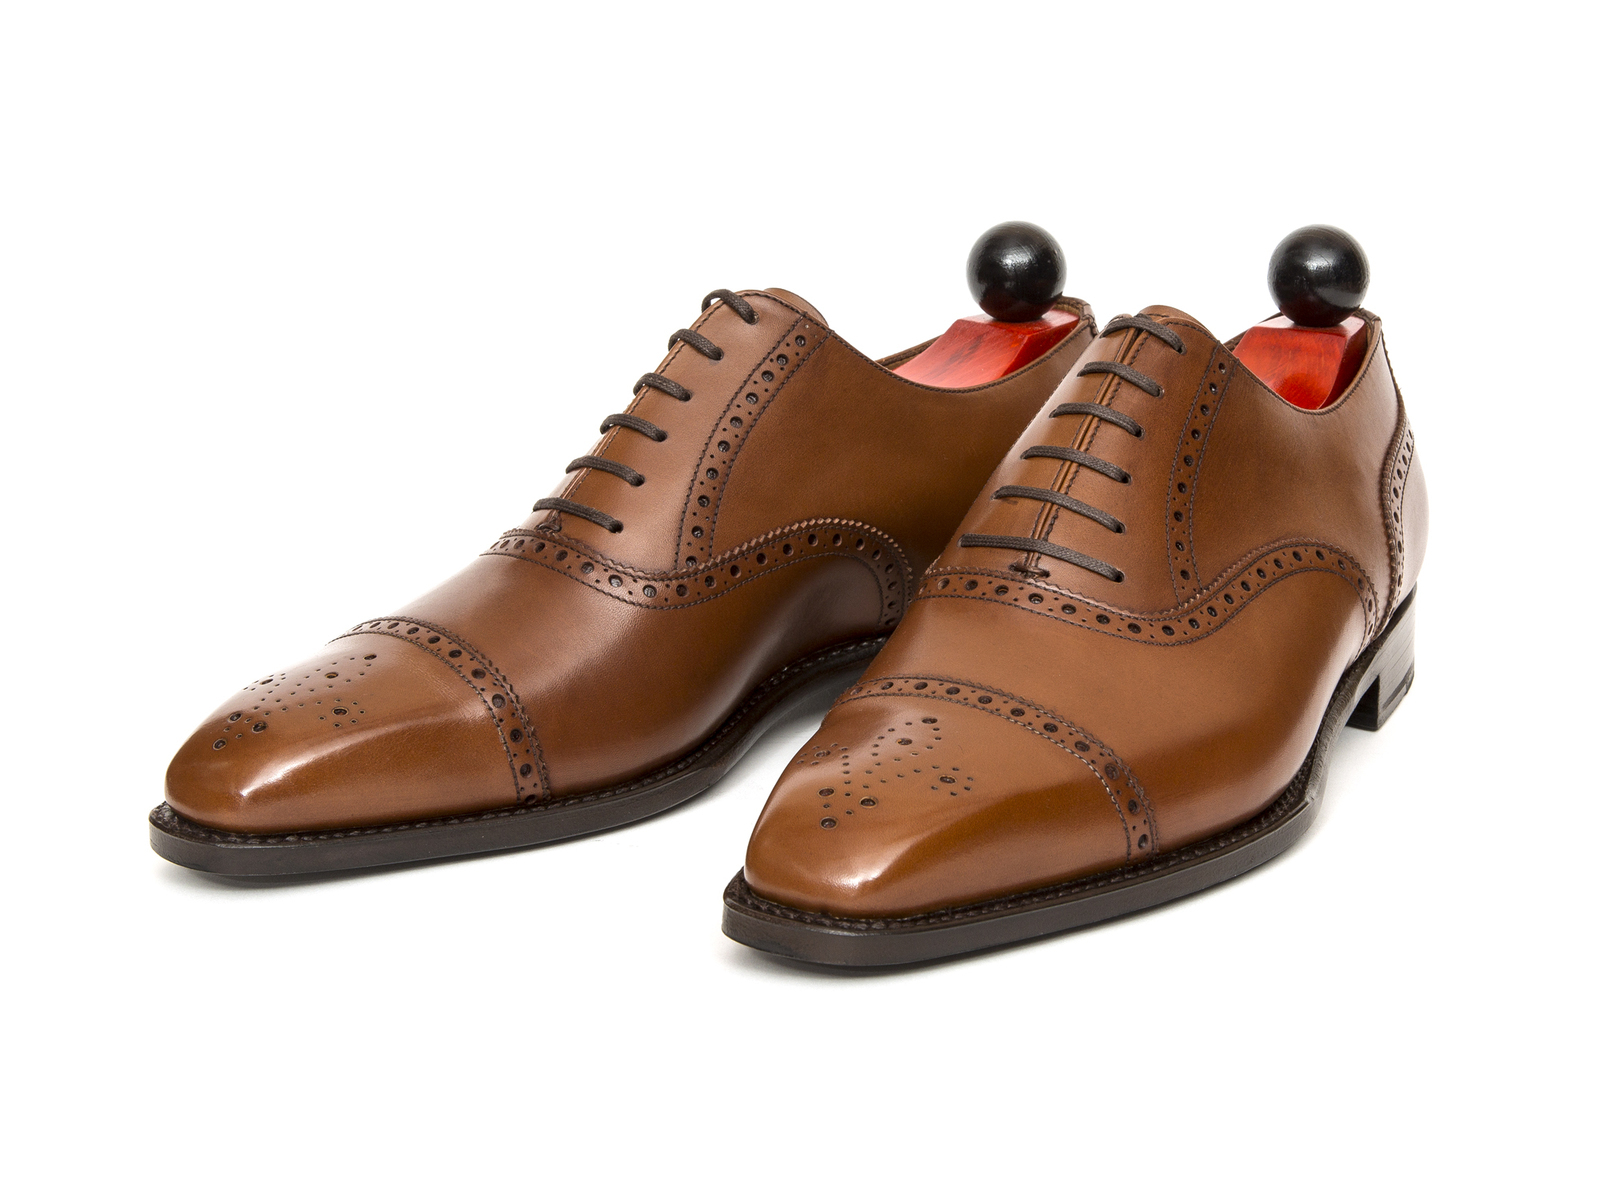 NEW Handmade Brown Color Shoes, Men Lace Up Cap Toe Leather Shoes, Men Fashion S